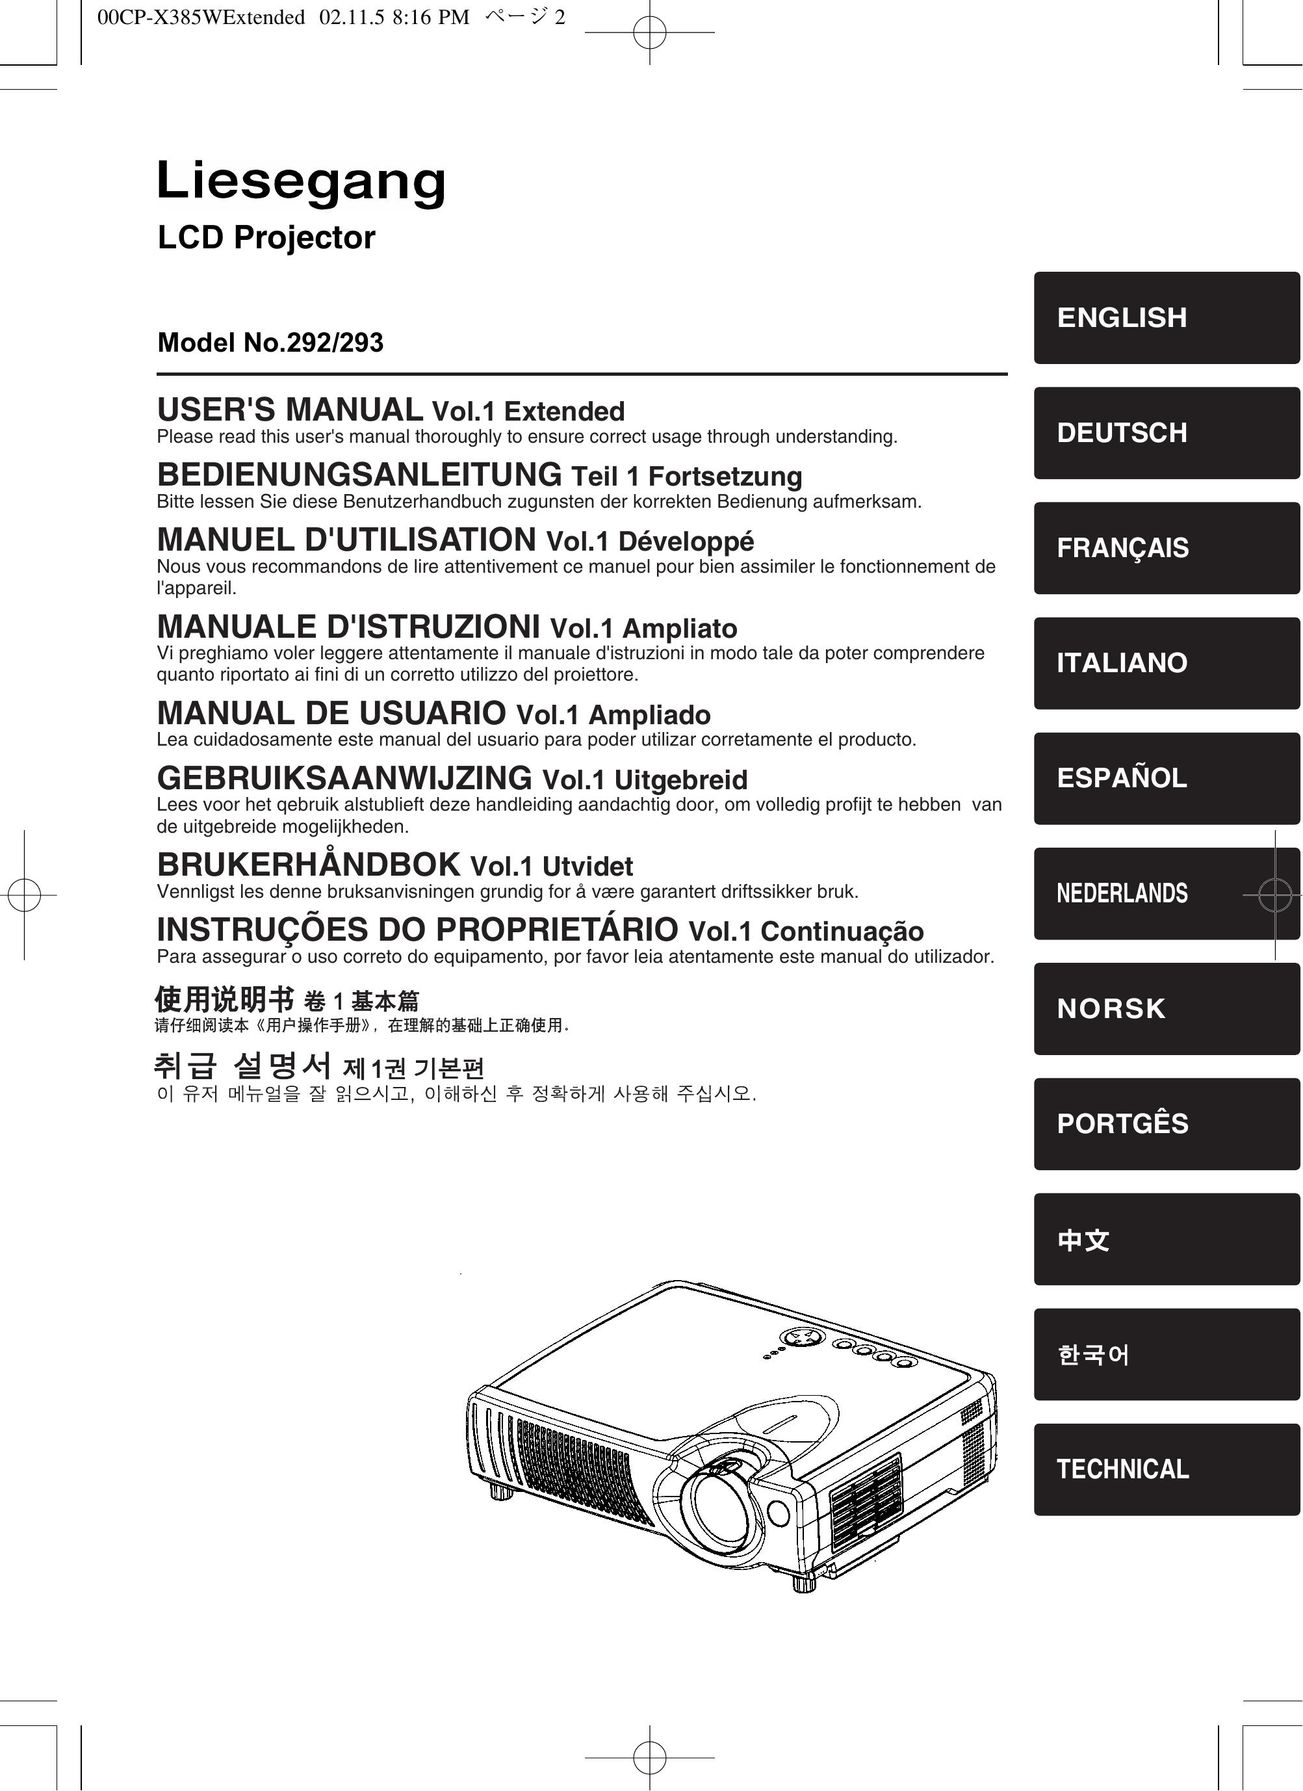 Liesegang 292 Projector User Manual